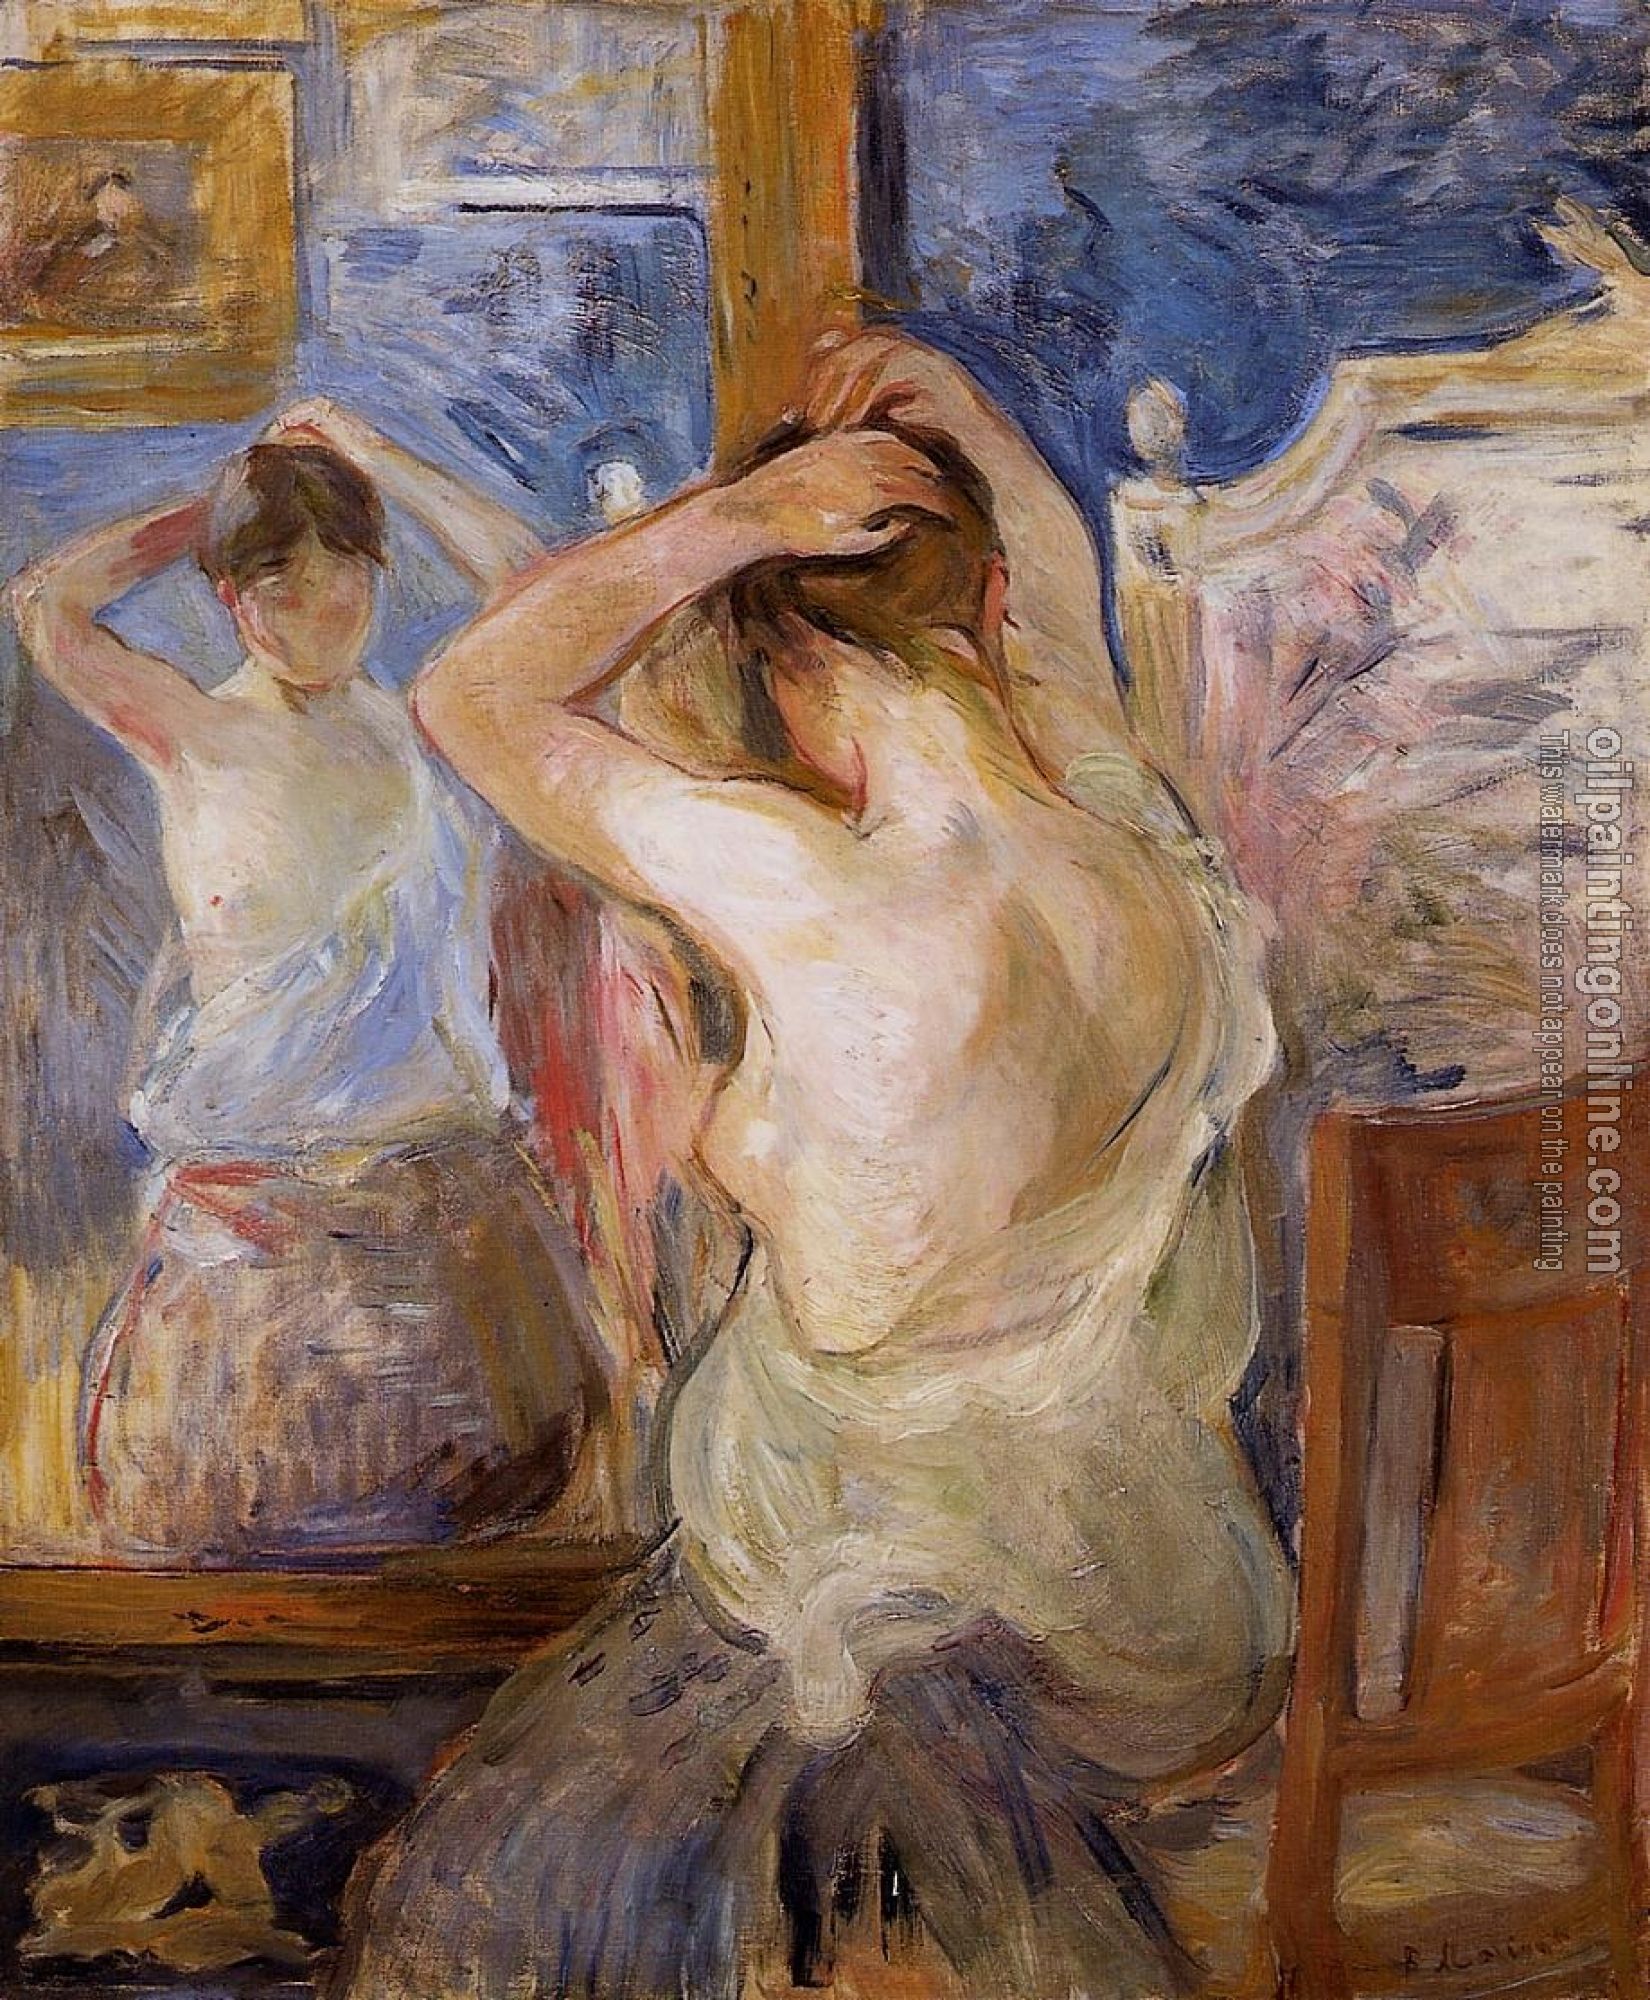 Morisot, Berthe - Before the Mirror